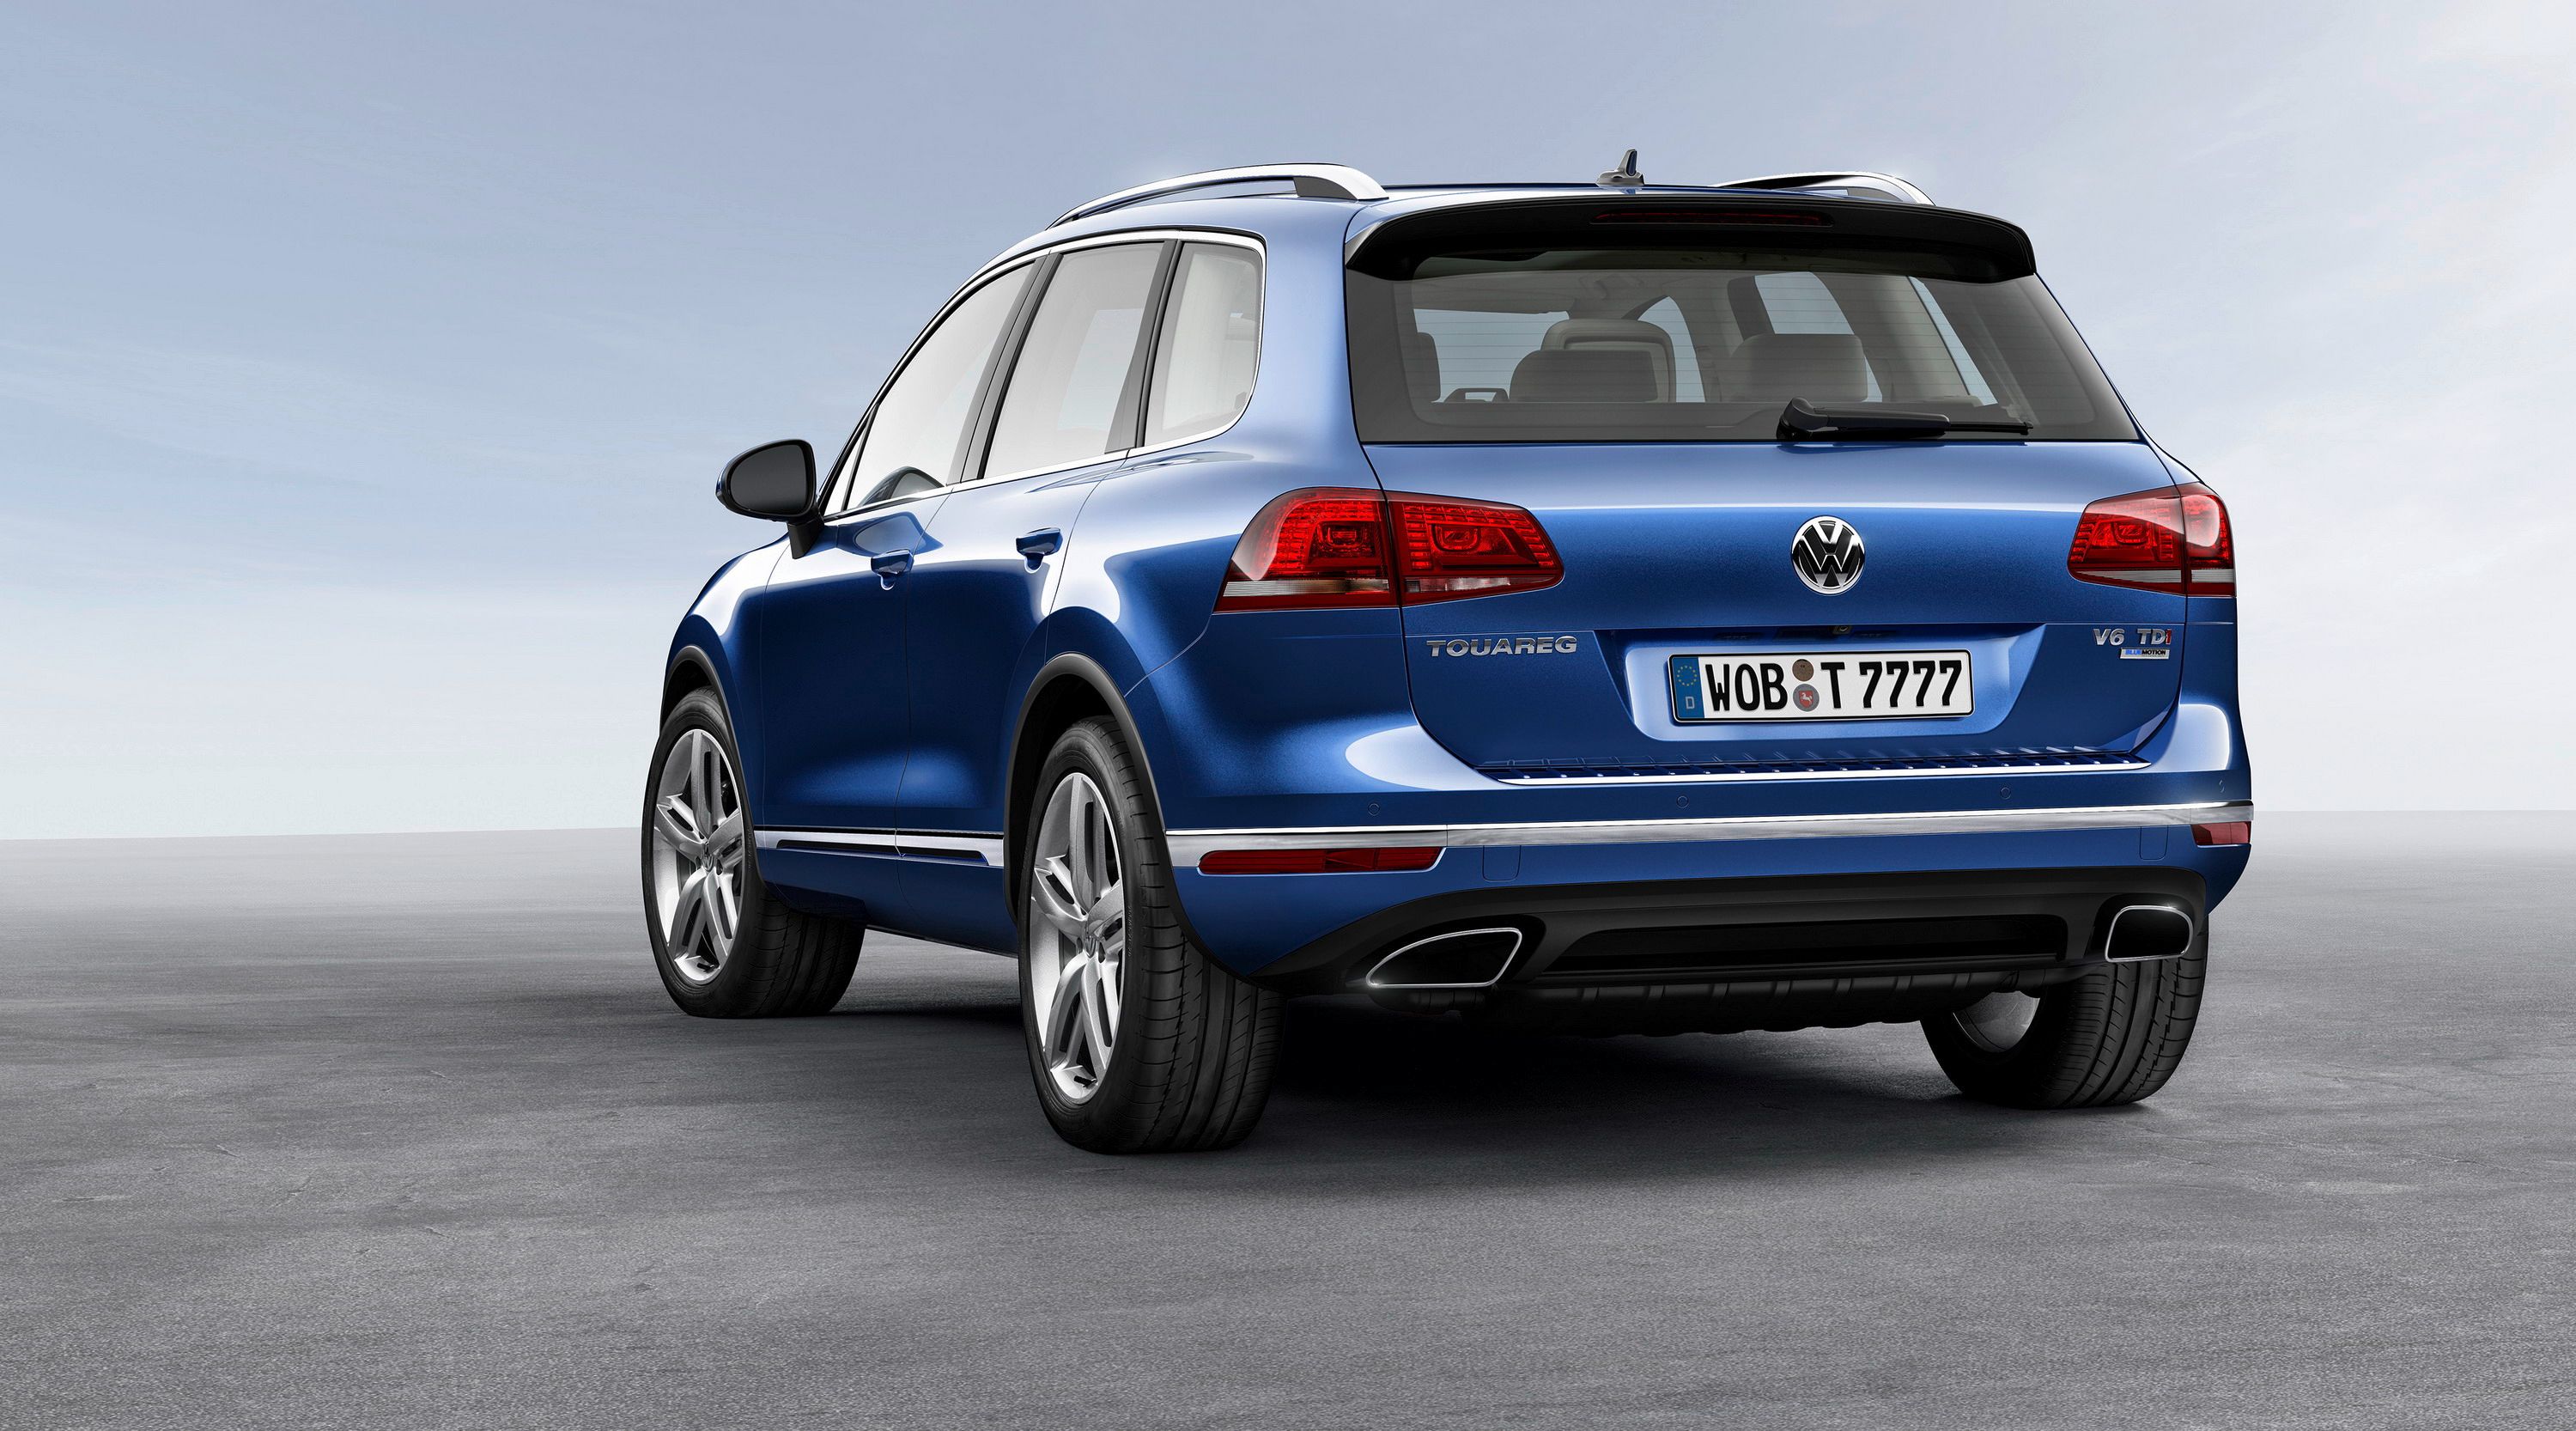 2015 - 2016 Volkswagen Touareg